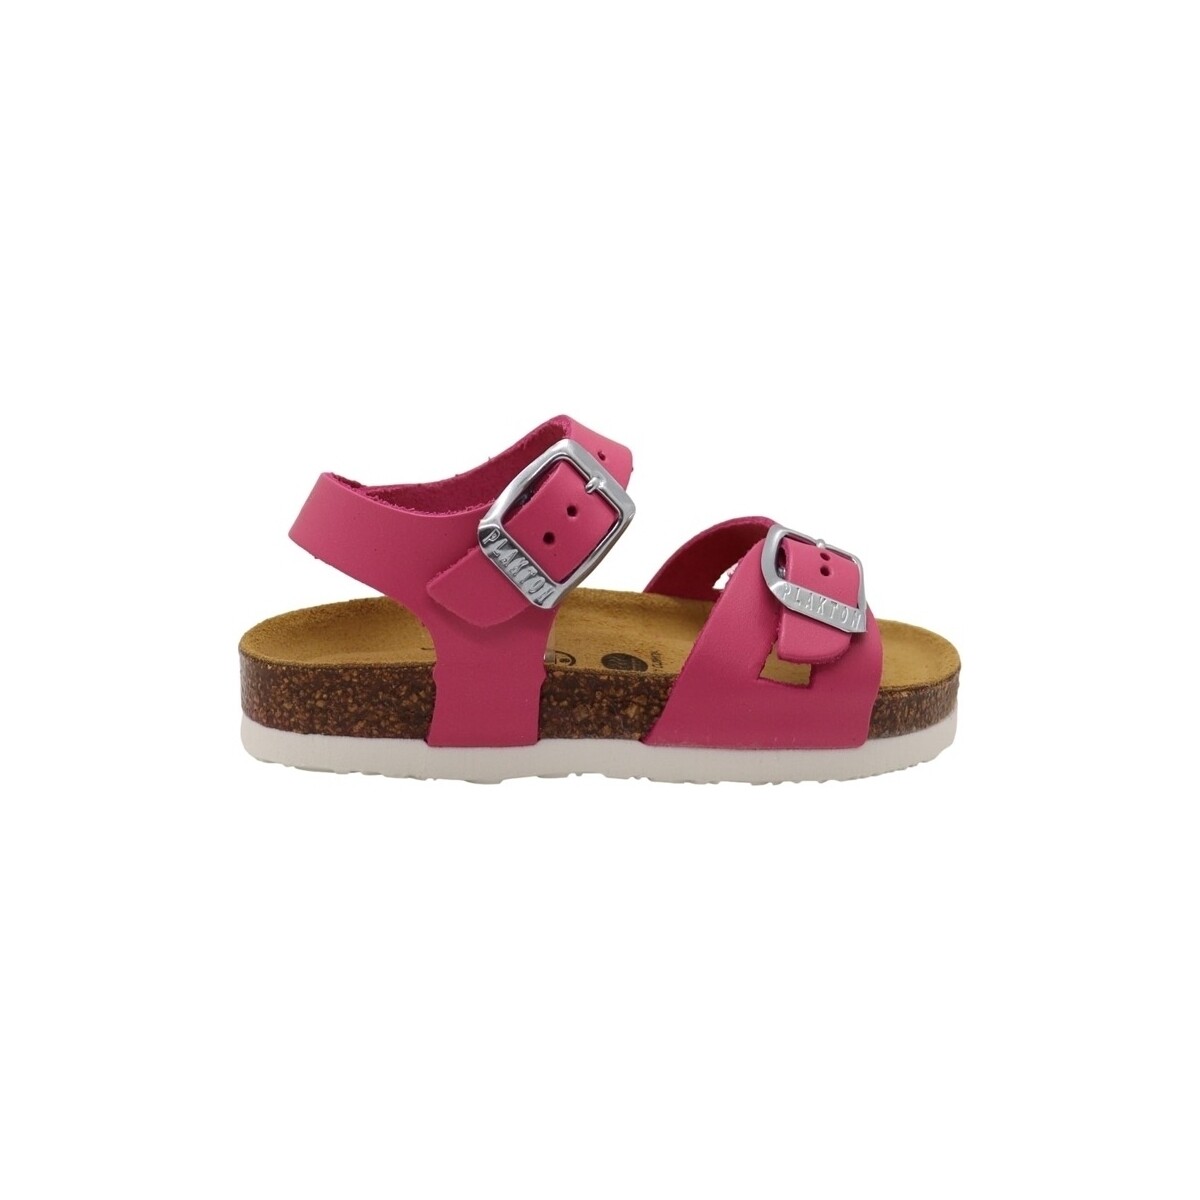 Schoenen Kinderen Sandalen / Open schoenen Plakton Lisa Kids Sandals - Fuxia Roze